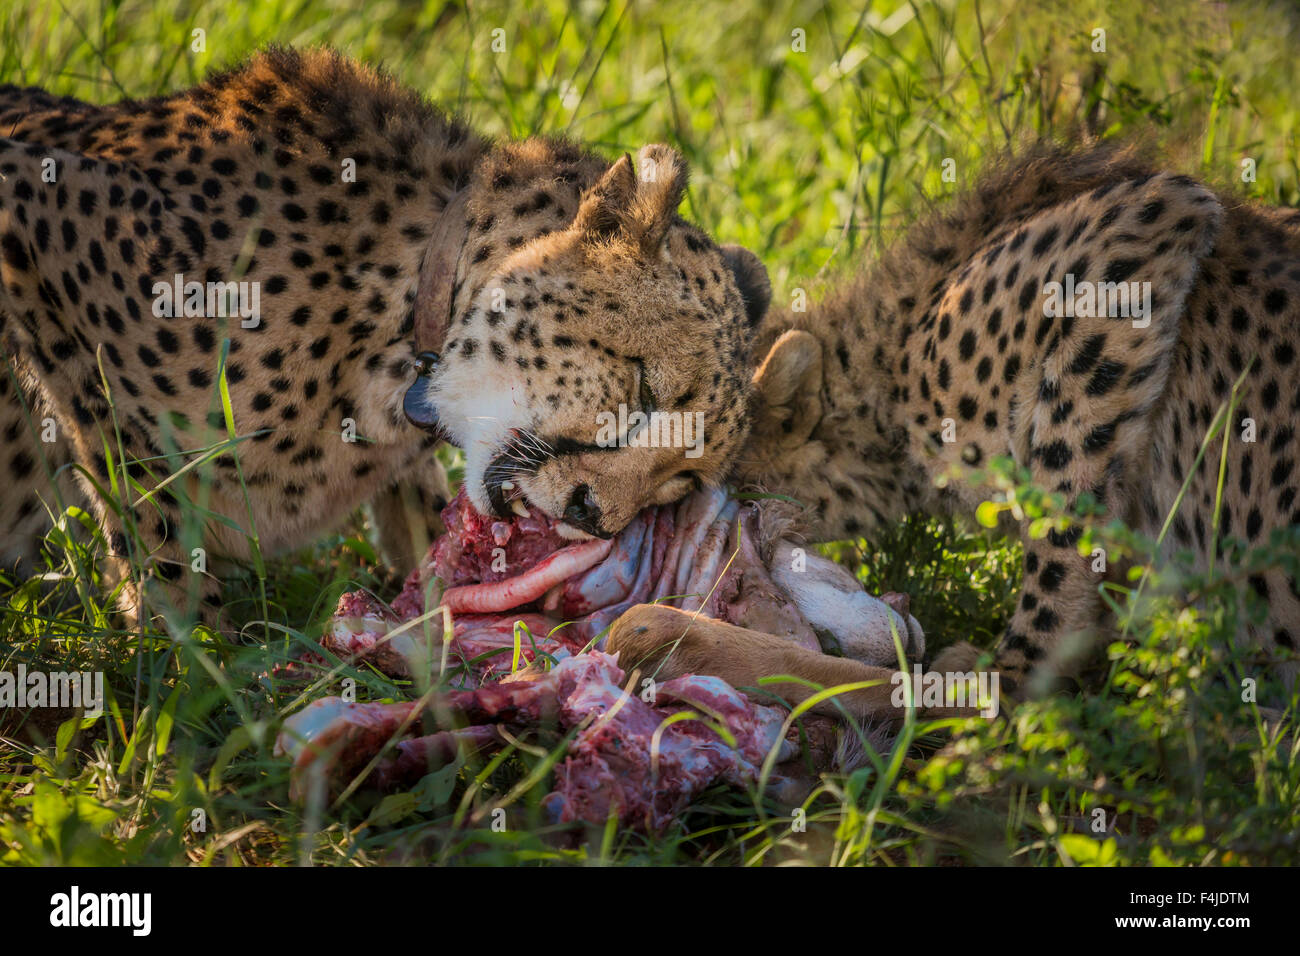 Cheetahs eating a gazelle, Etosha National Park, Namibia, Africa Stock Photo